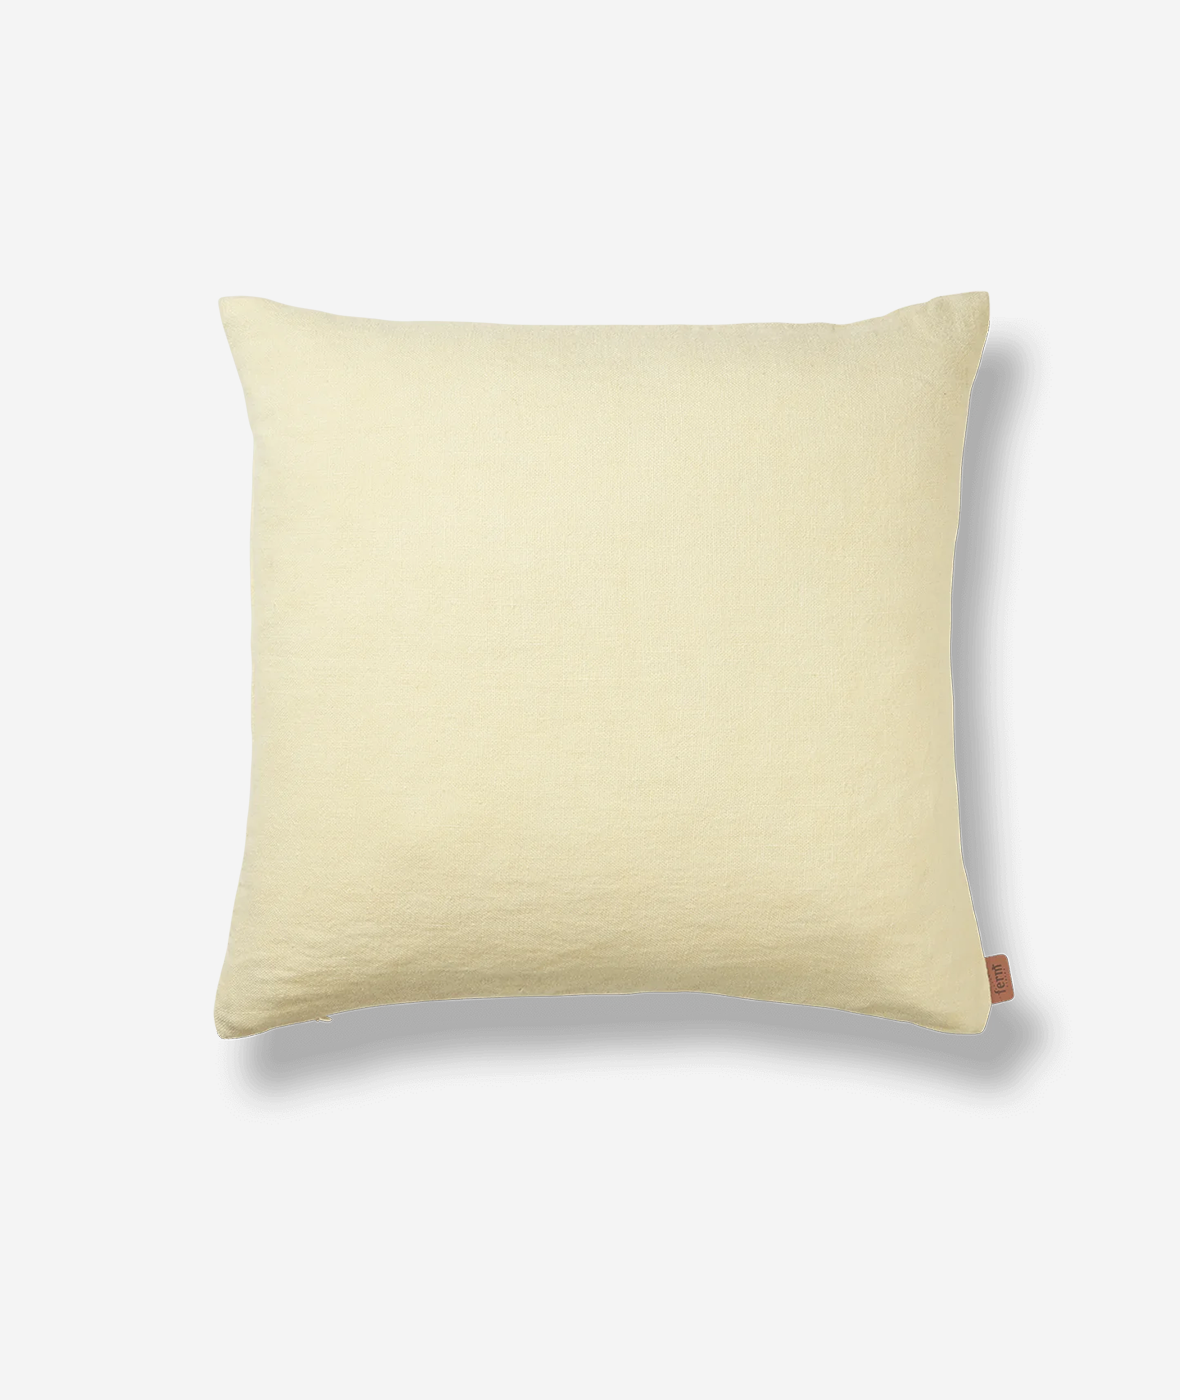 Heavy Linen Pillow - More Options